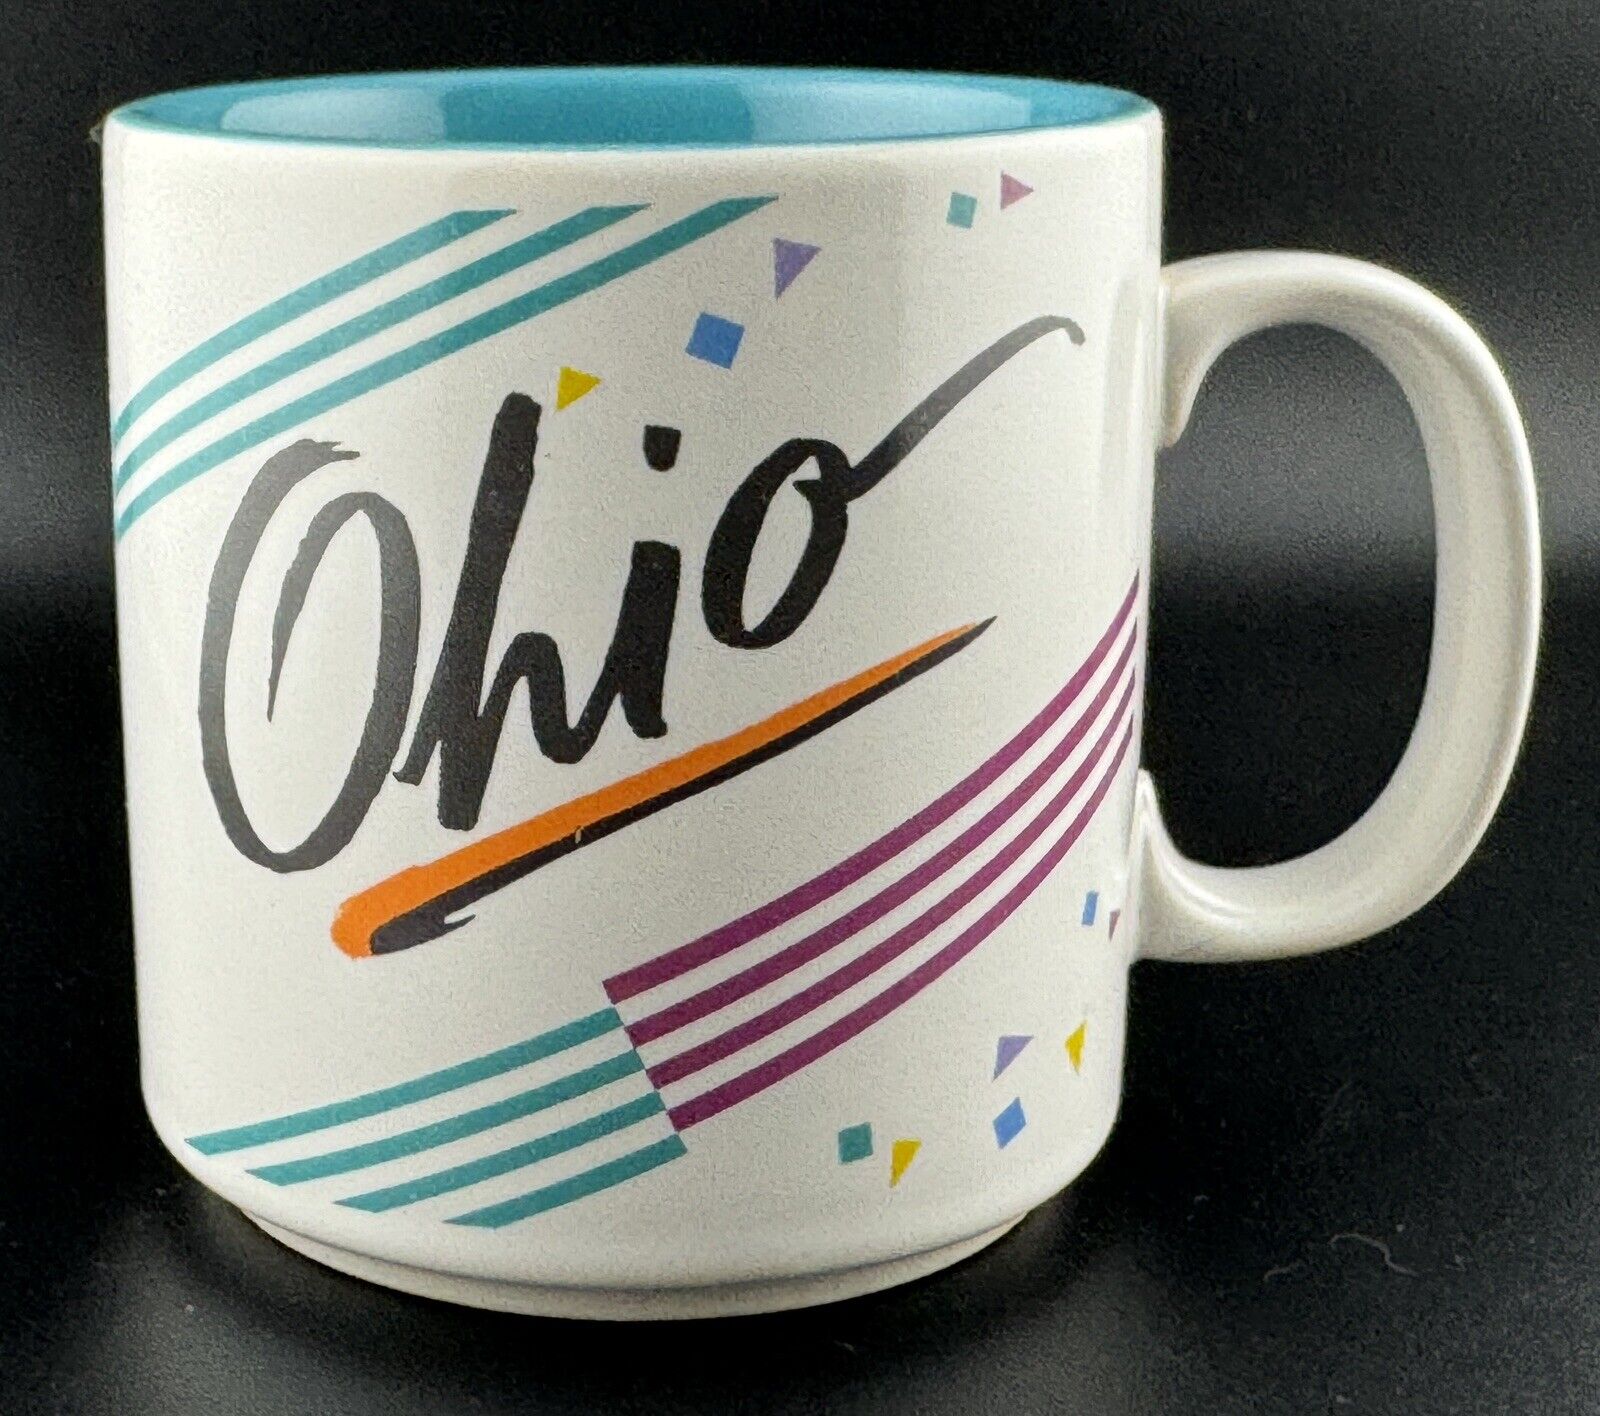 Vintage Ohio Souvenir Mug By Papel Retro Graphics Teal Inside